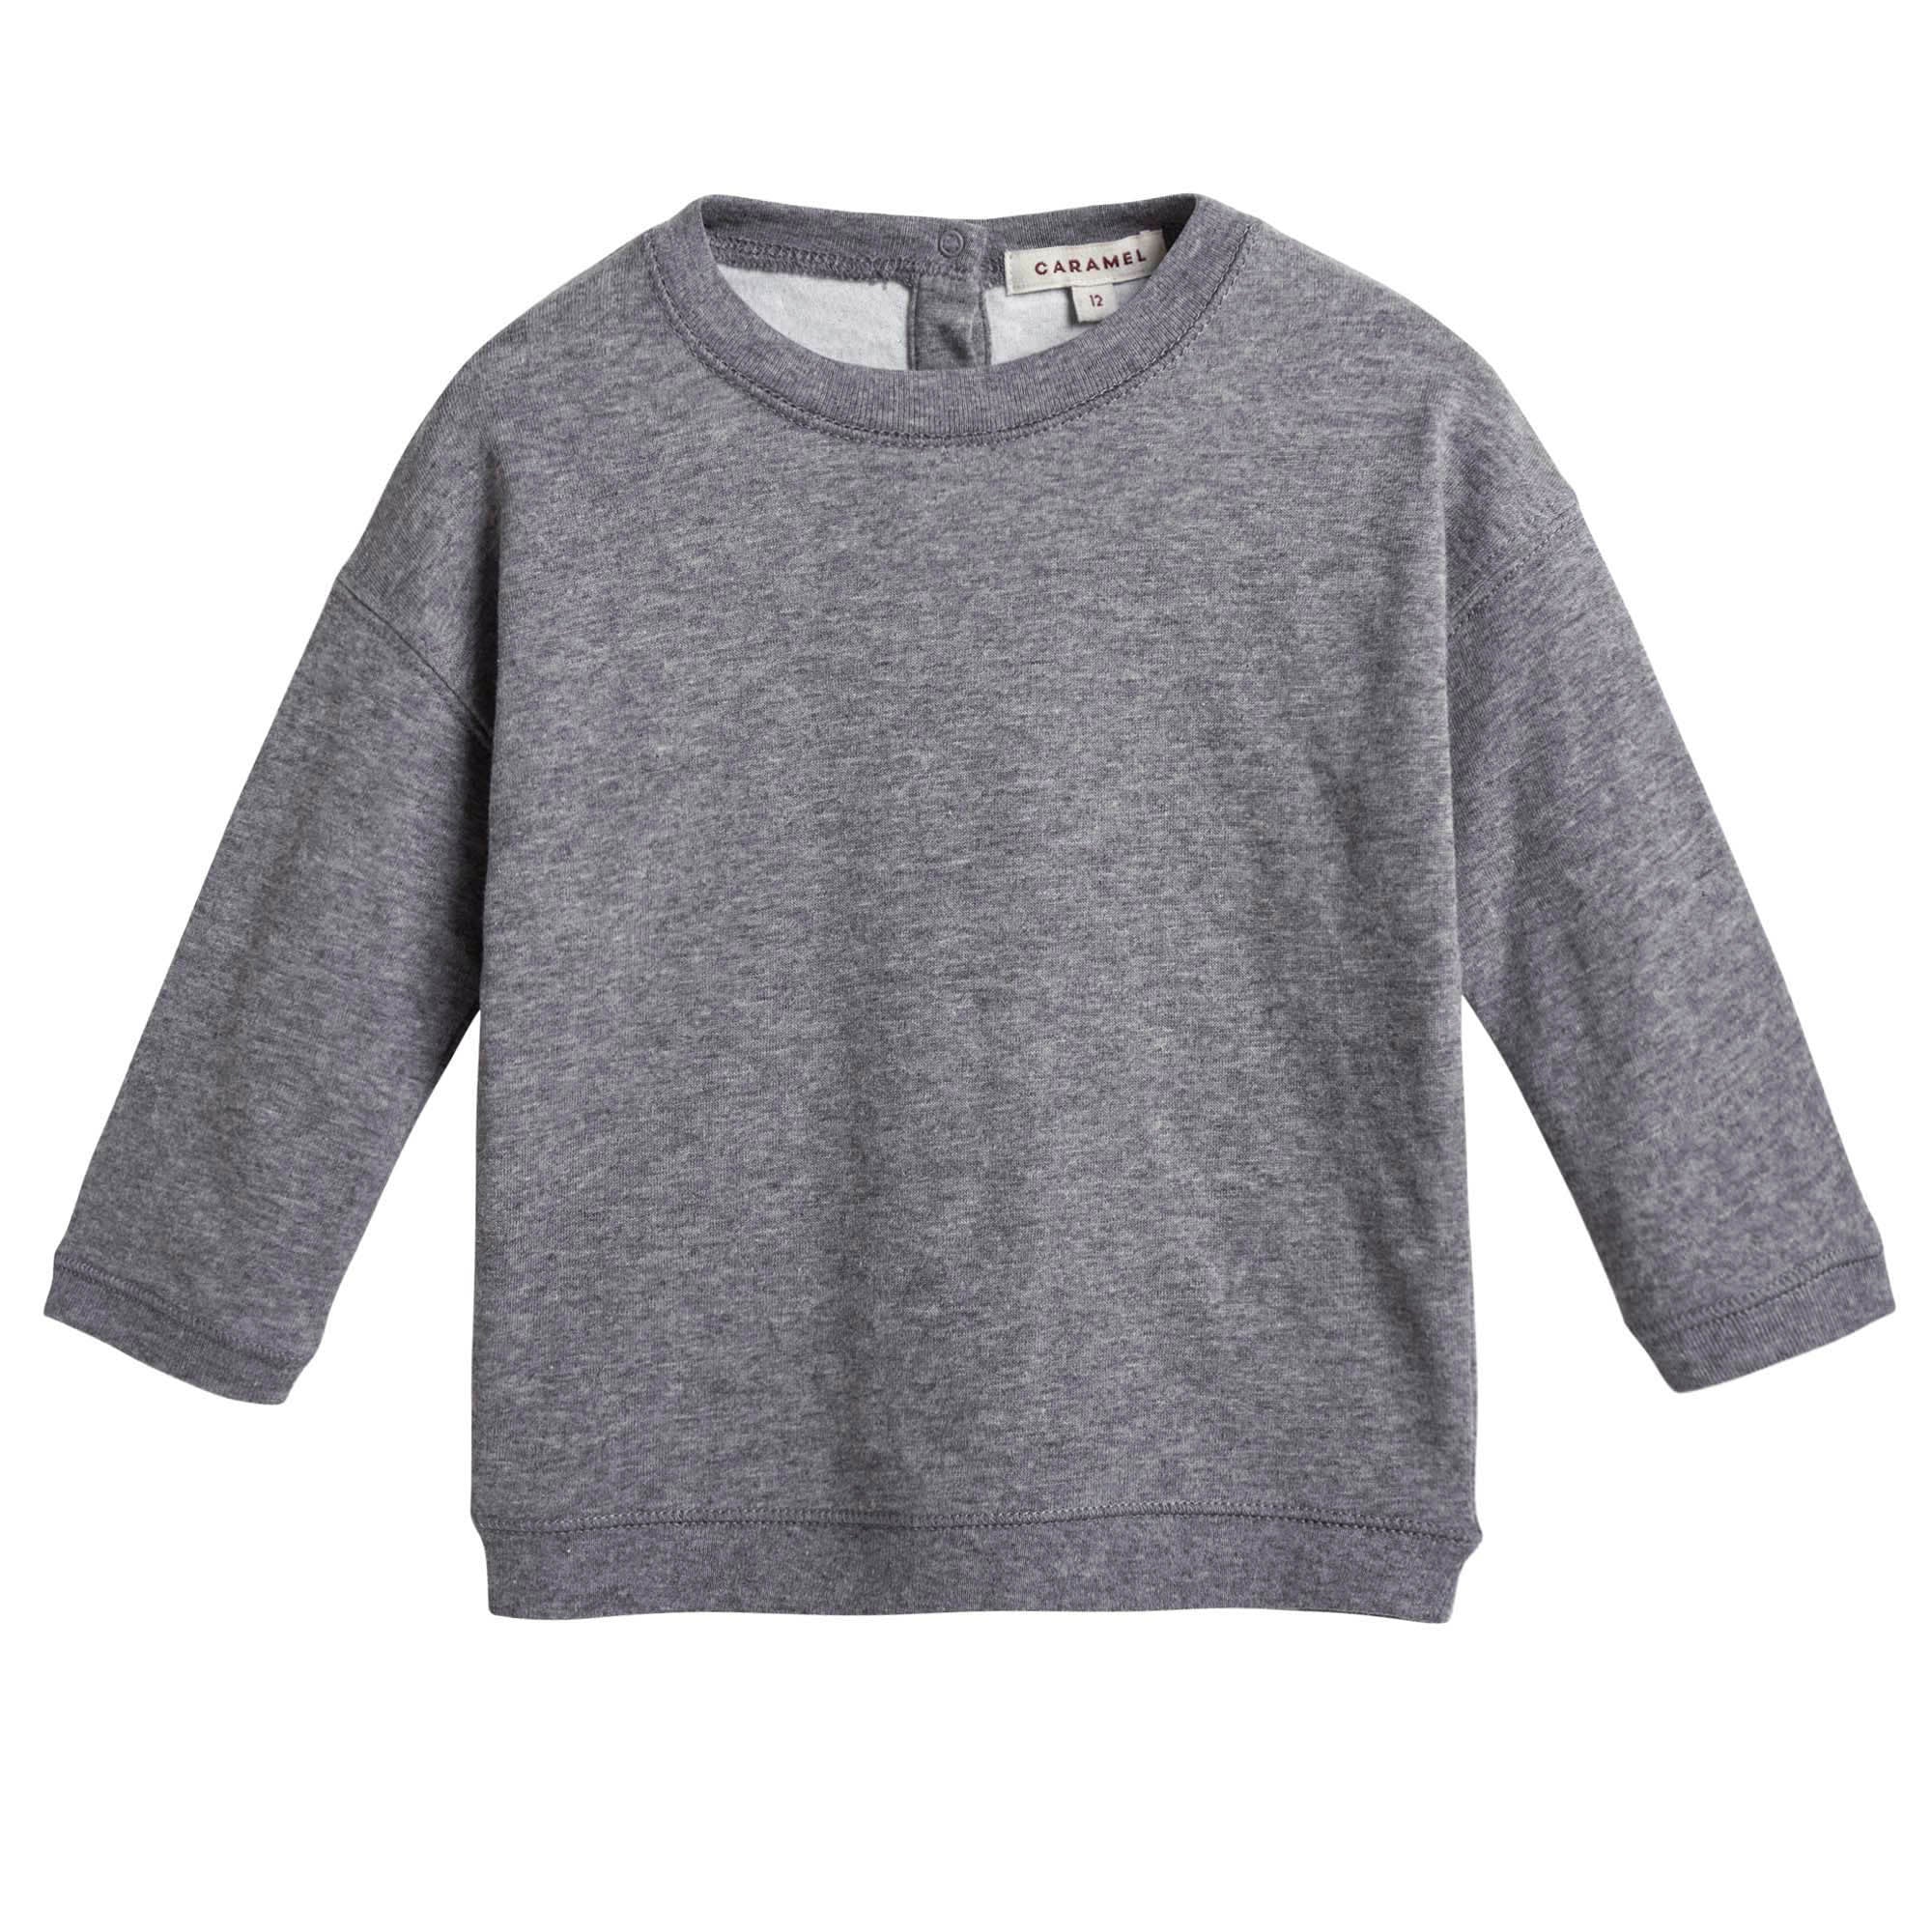 Baby Boys Grey Cotton Jersey Sweater - CÉMAROSE | Children's Fashion Store - 1